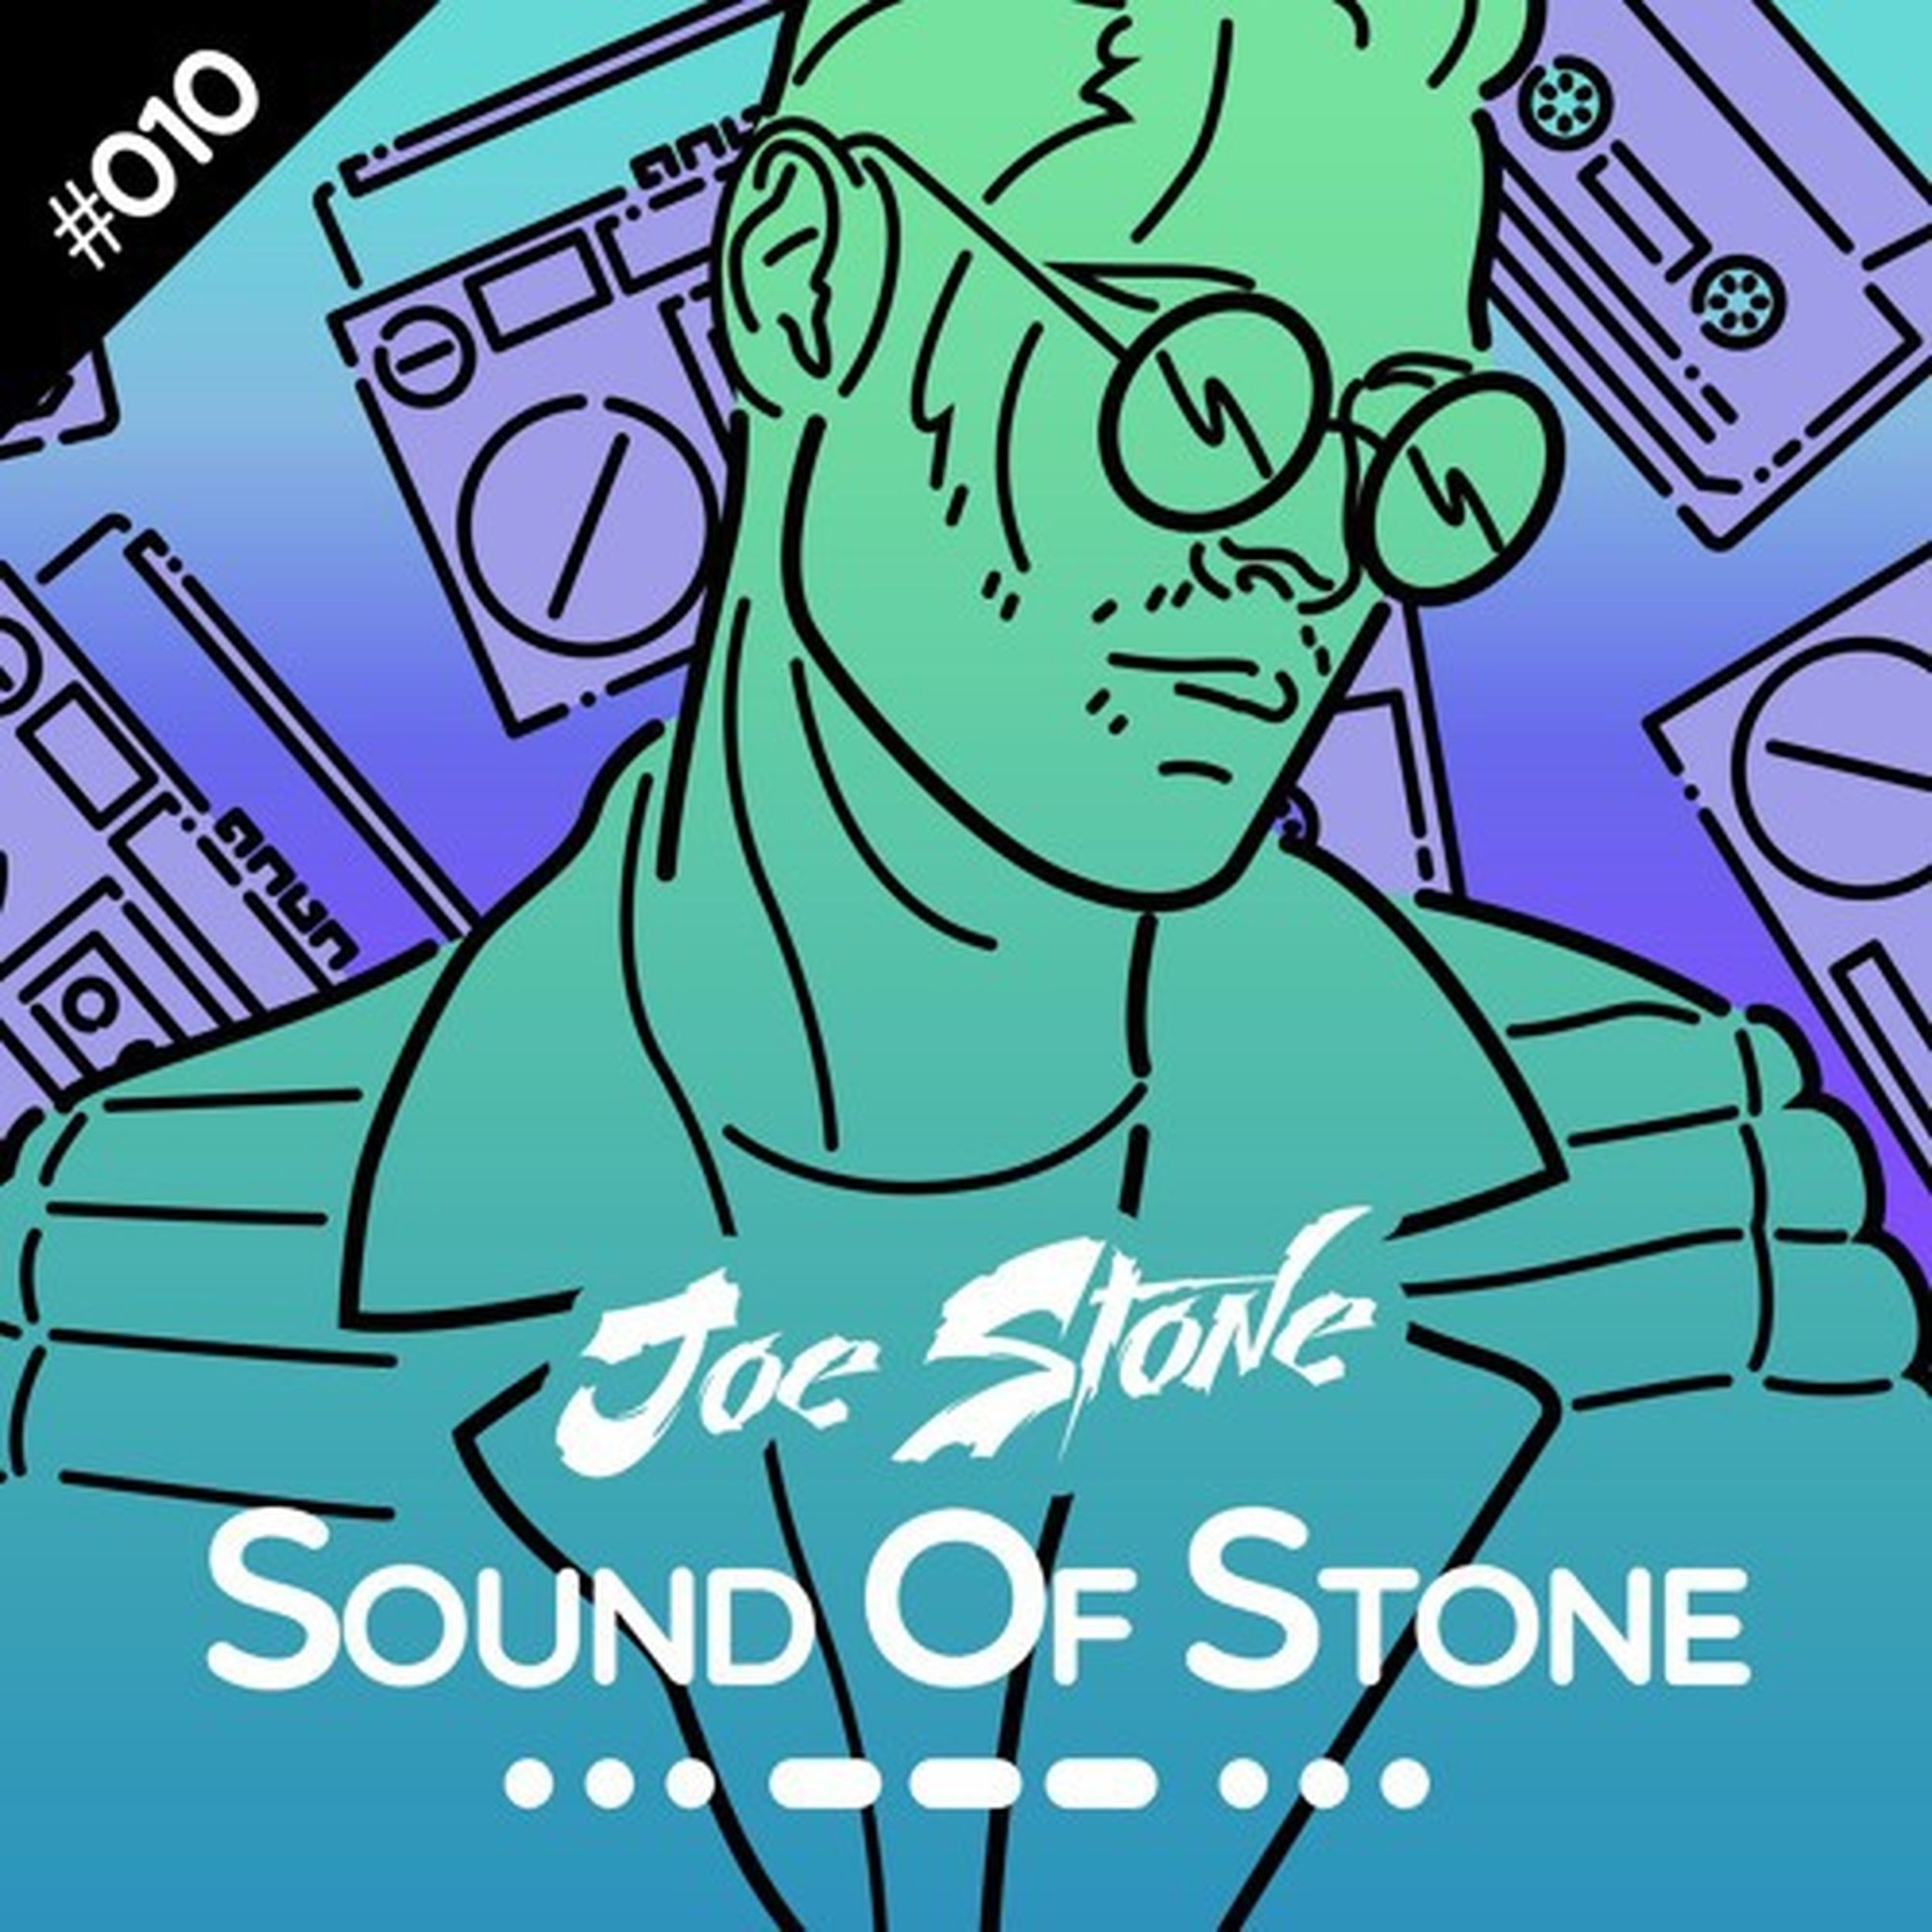 Stone саунд. Joe Stone.